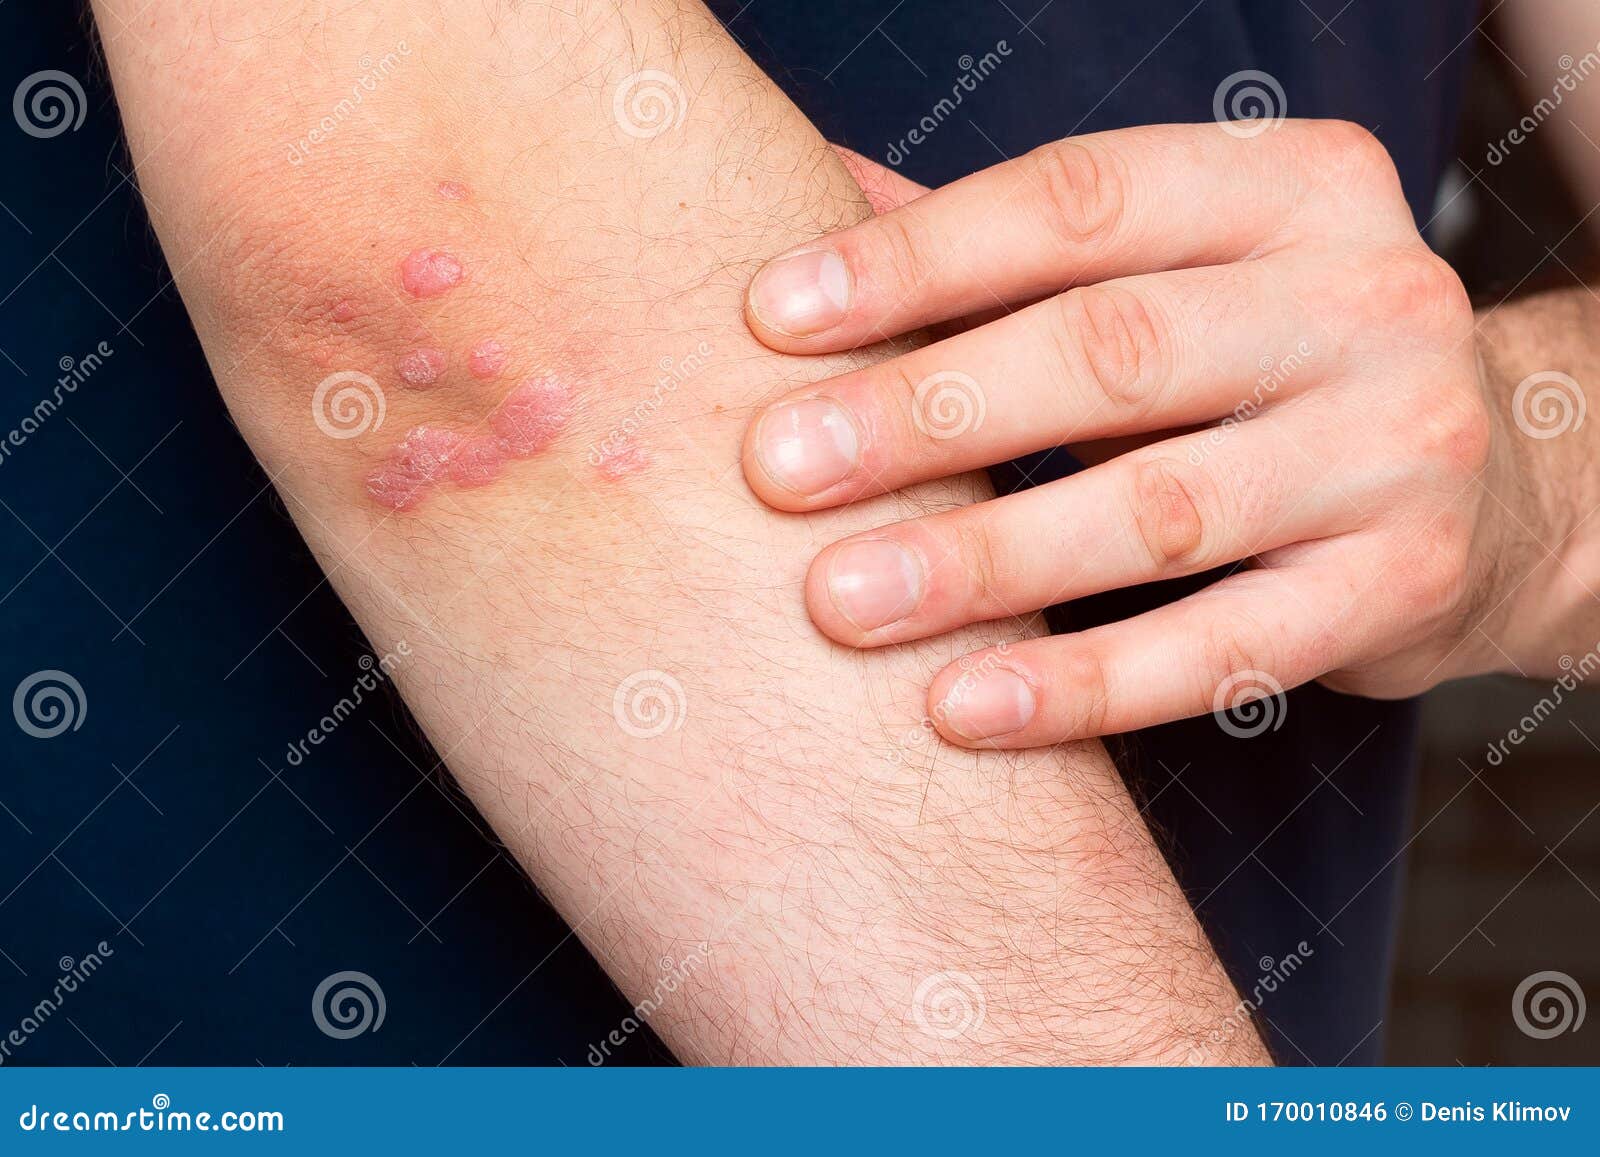 psoriasis painful elbows)